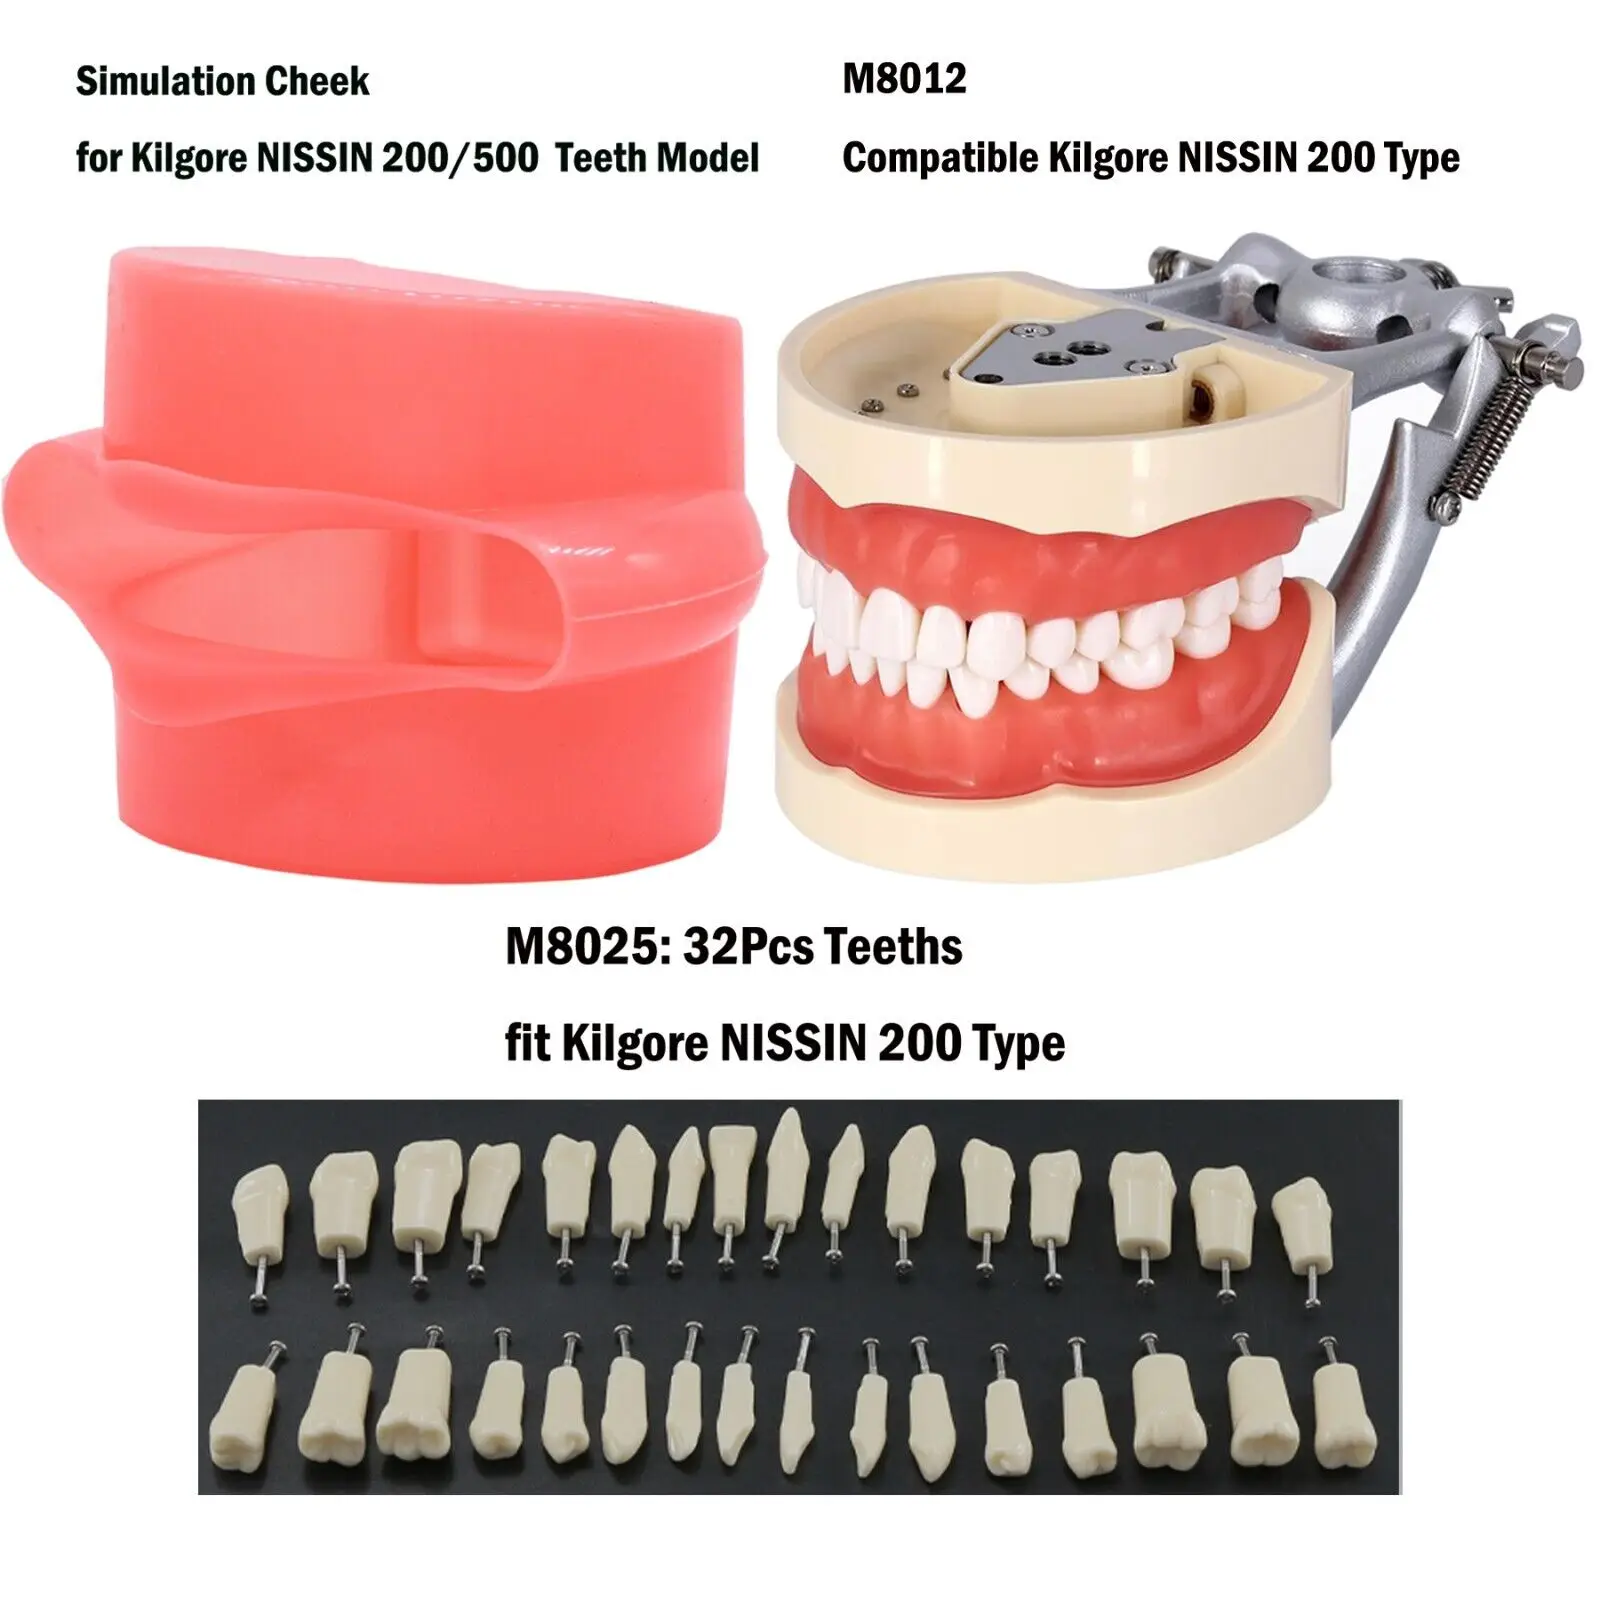 

Dental Typodont 32Pcs Removable Teeth Model Fit Kilgore NISSIN 200 Type M8012 Suture Practice Kit